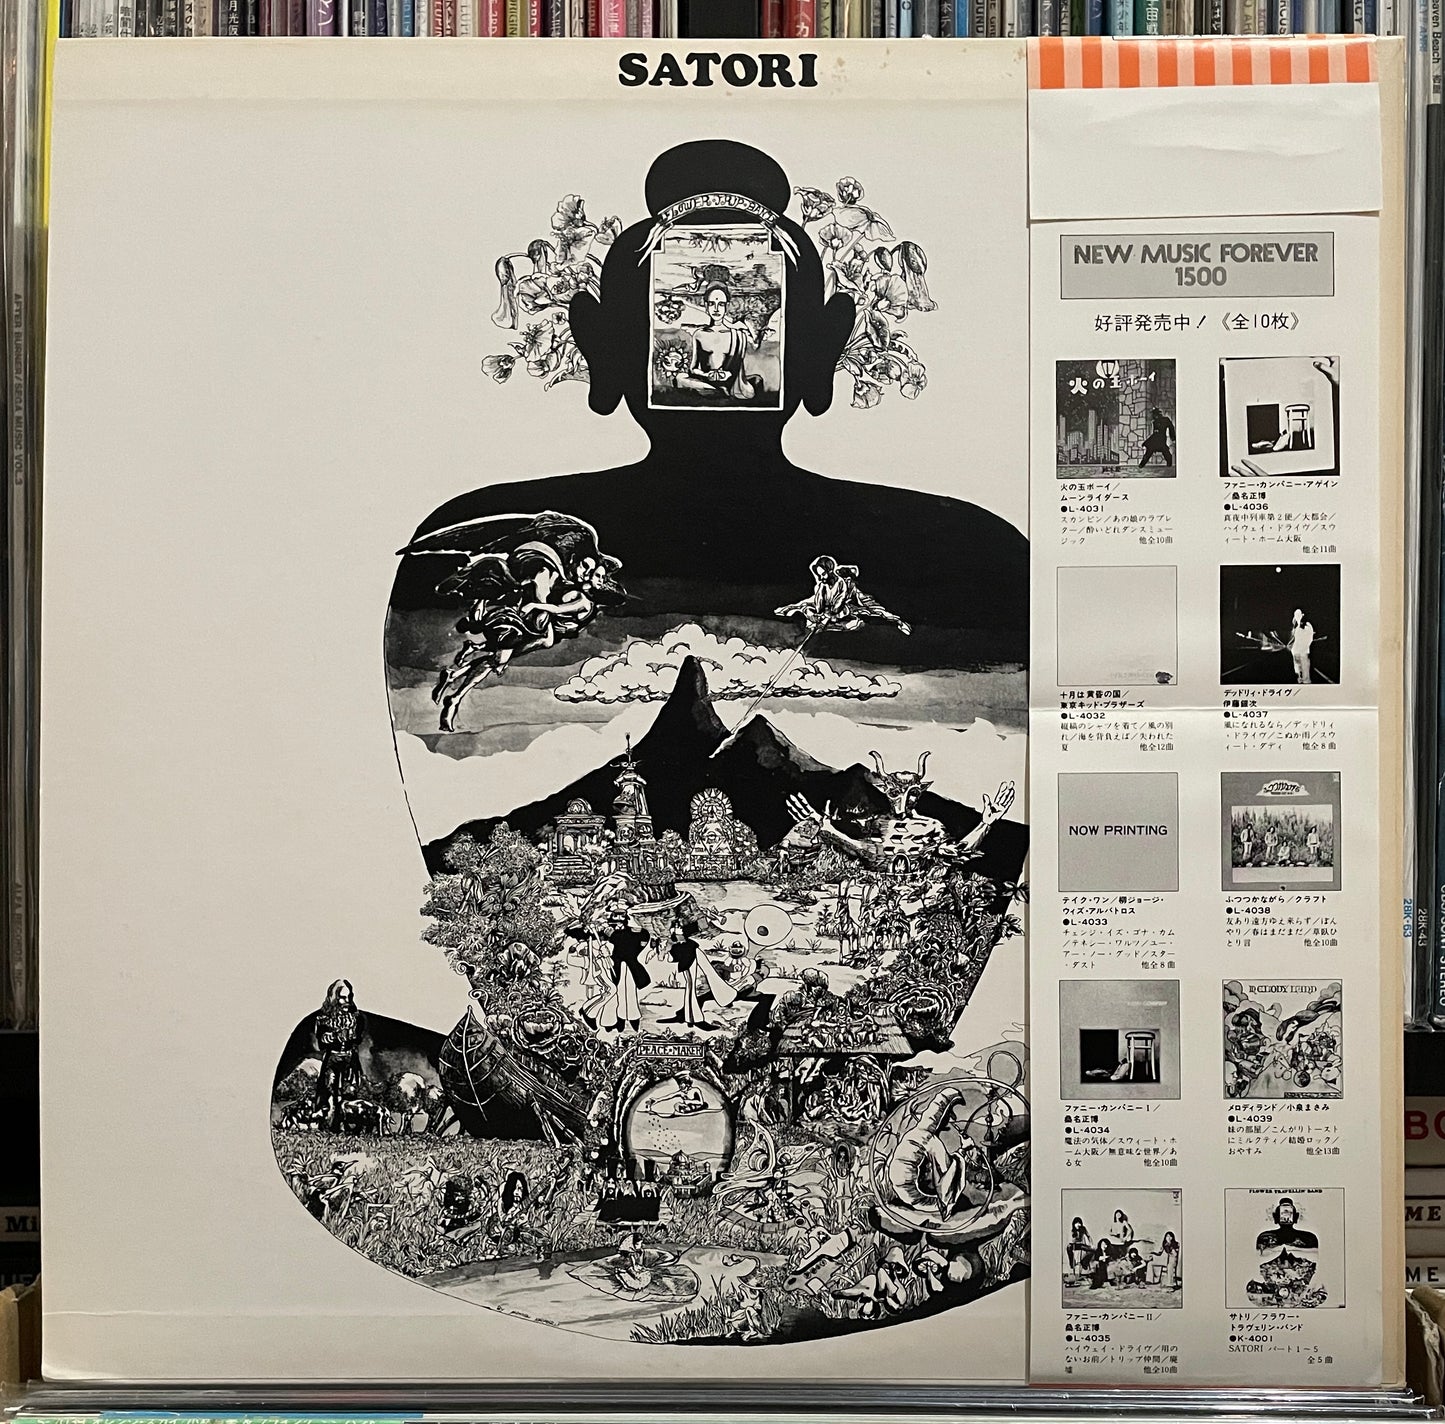 Flower Travellin’ Band “Satori” (1974)